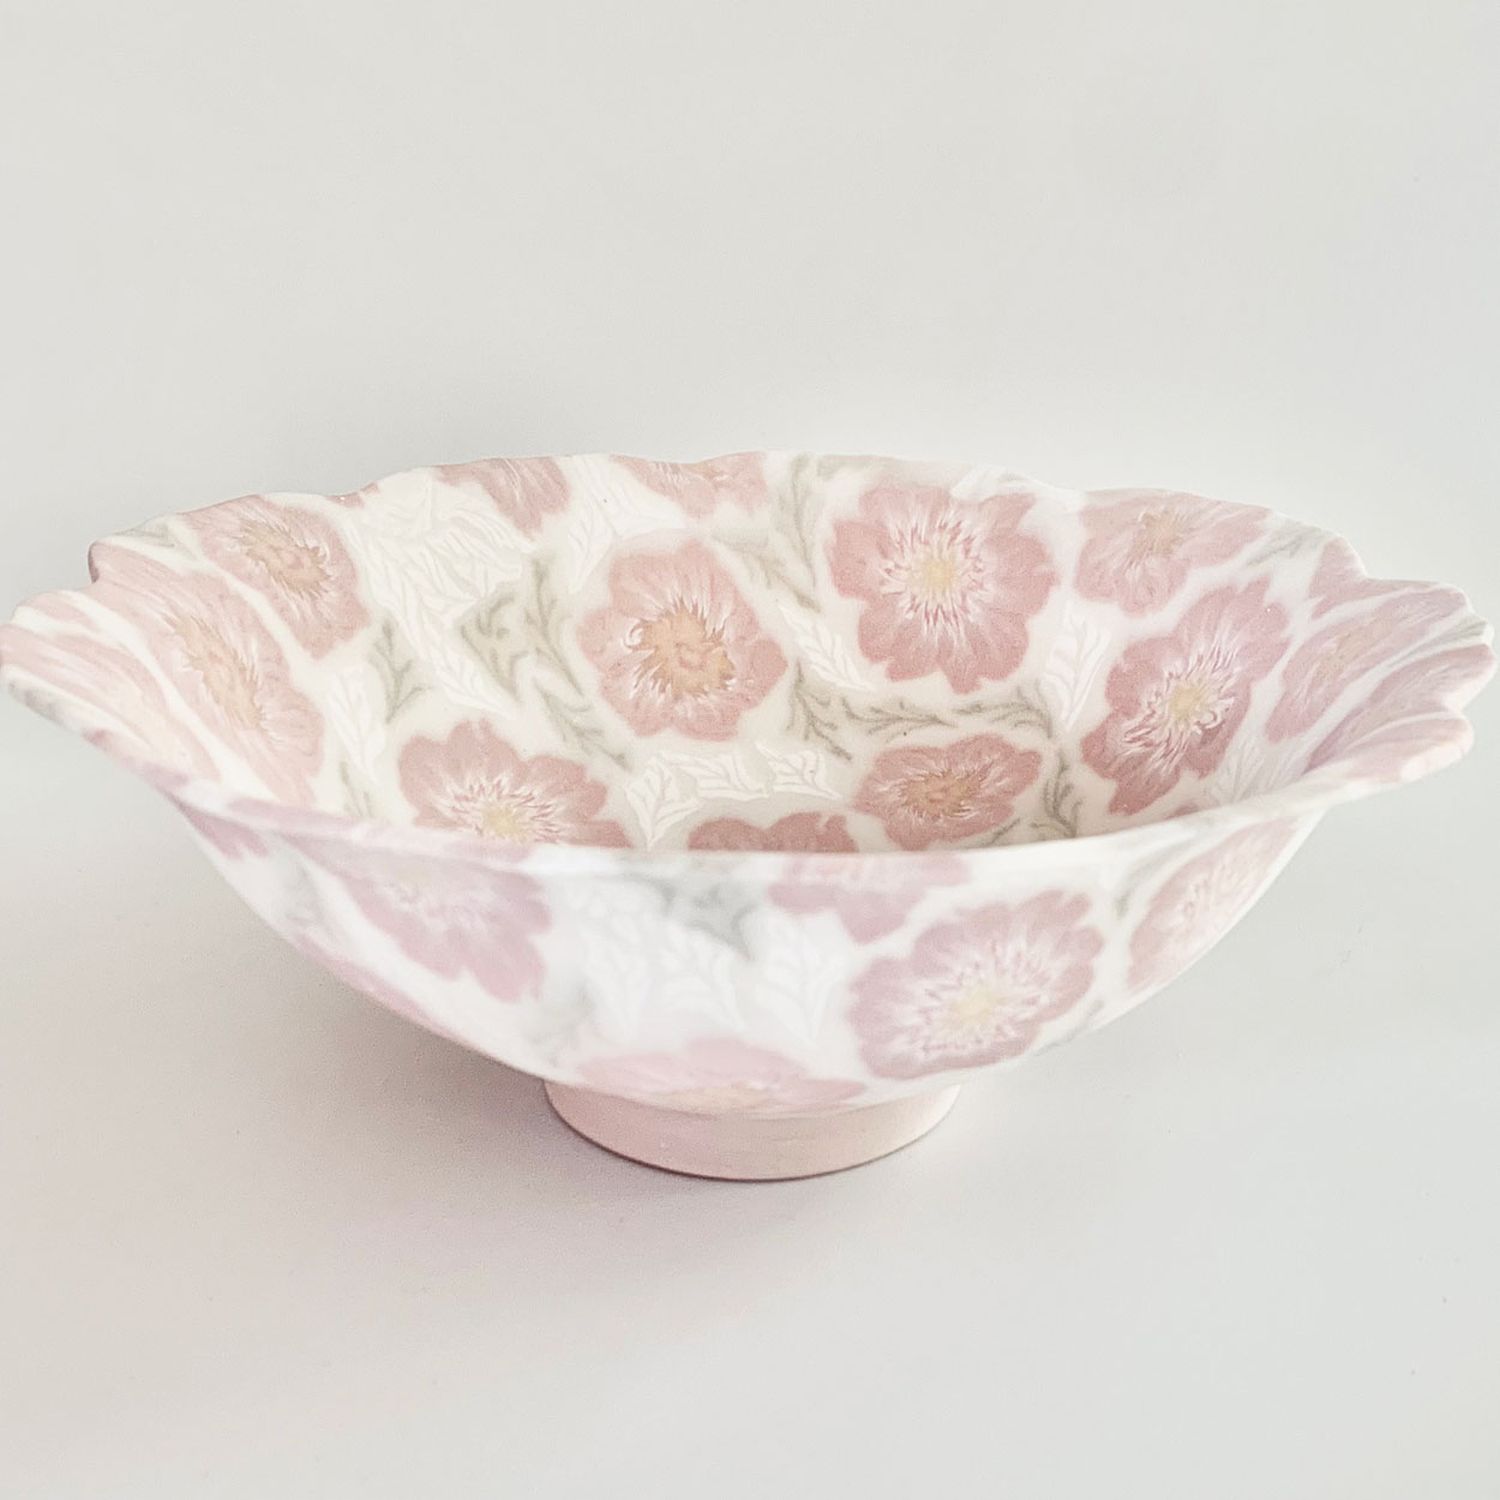 Eiko Maeda: Pink Bowl Product Image 1 of 2